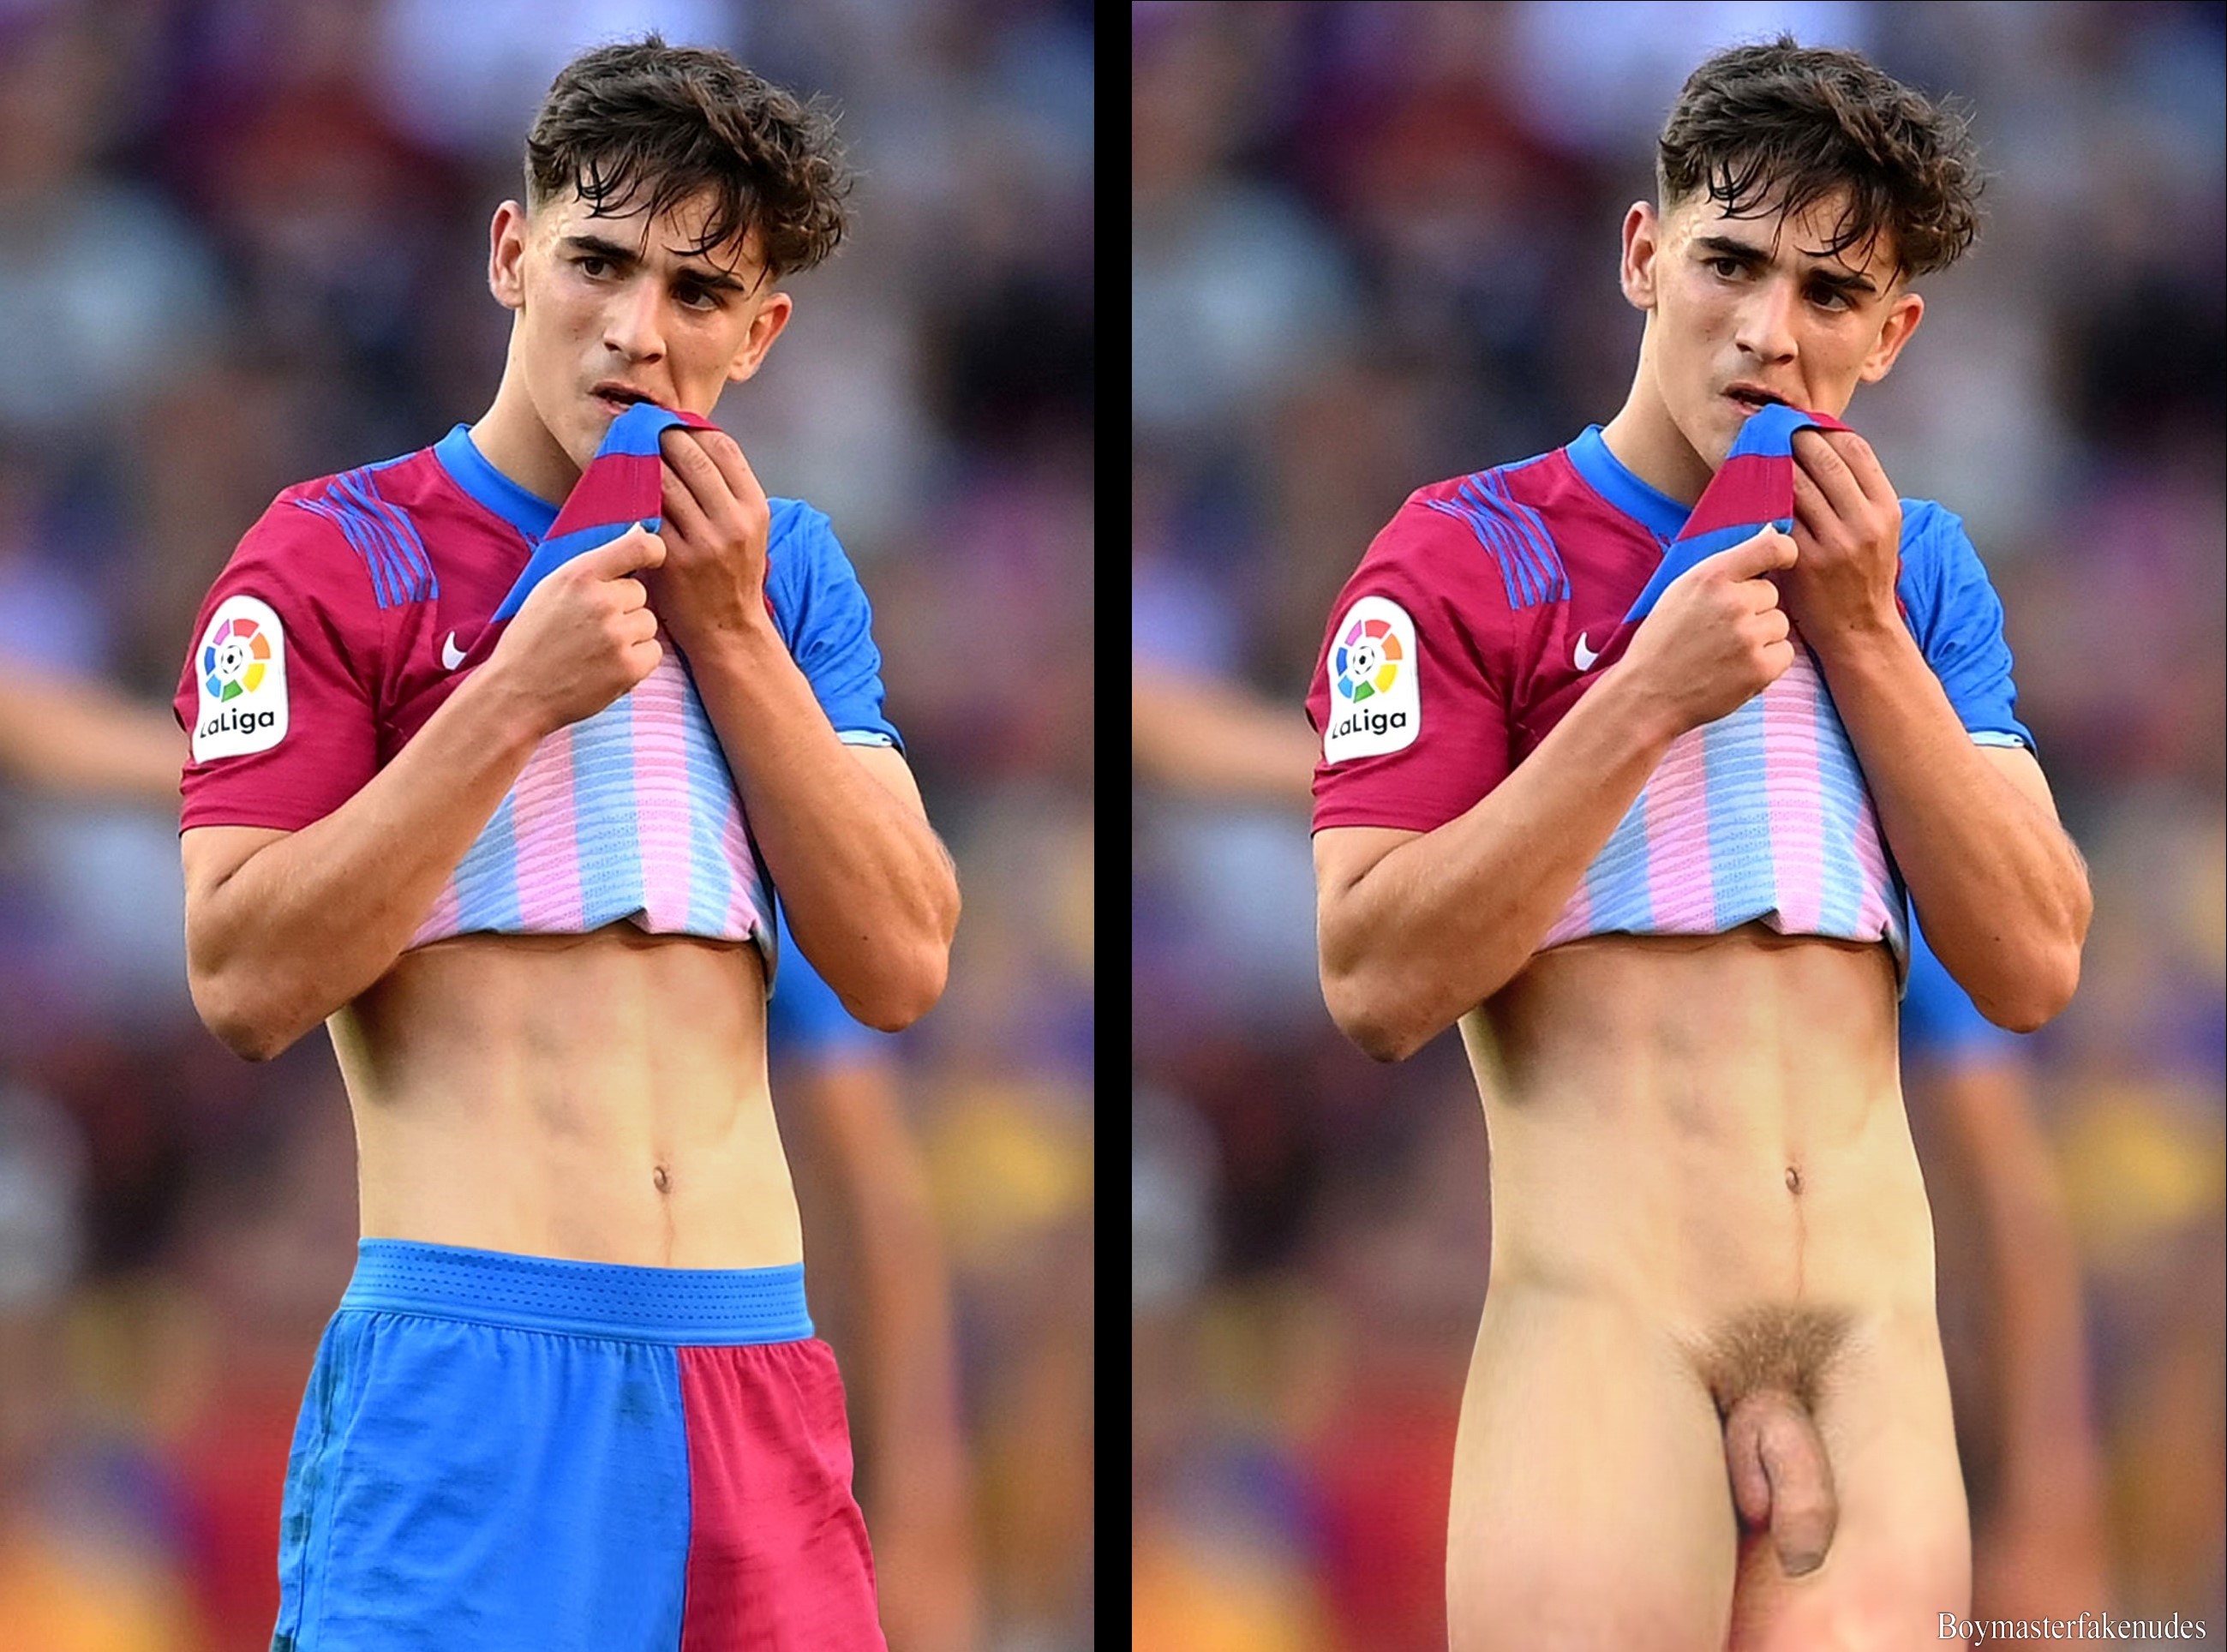 Boymaster Fake Nudes Pablo Gavi Spanish Football Player Cock Shots